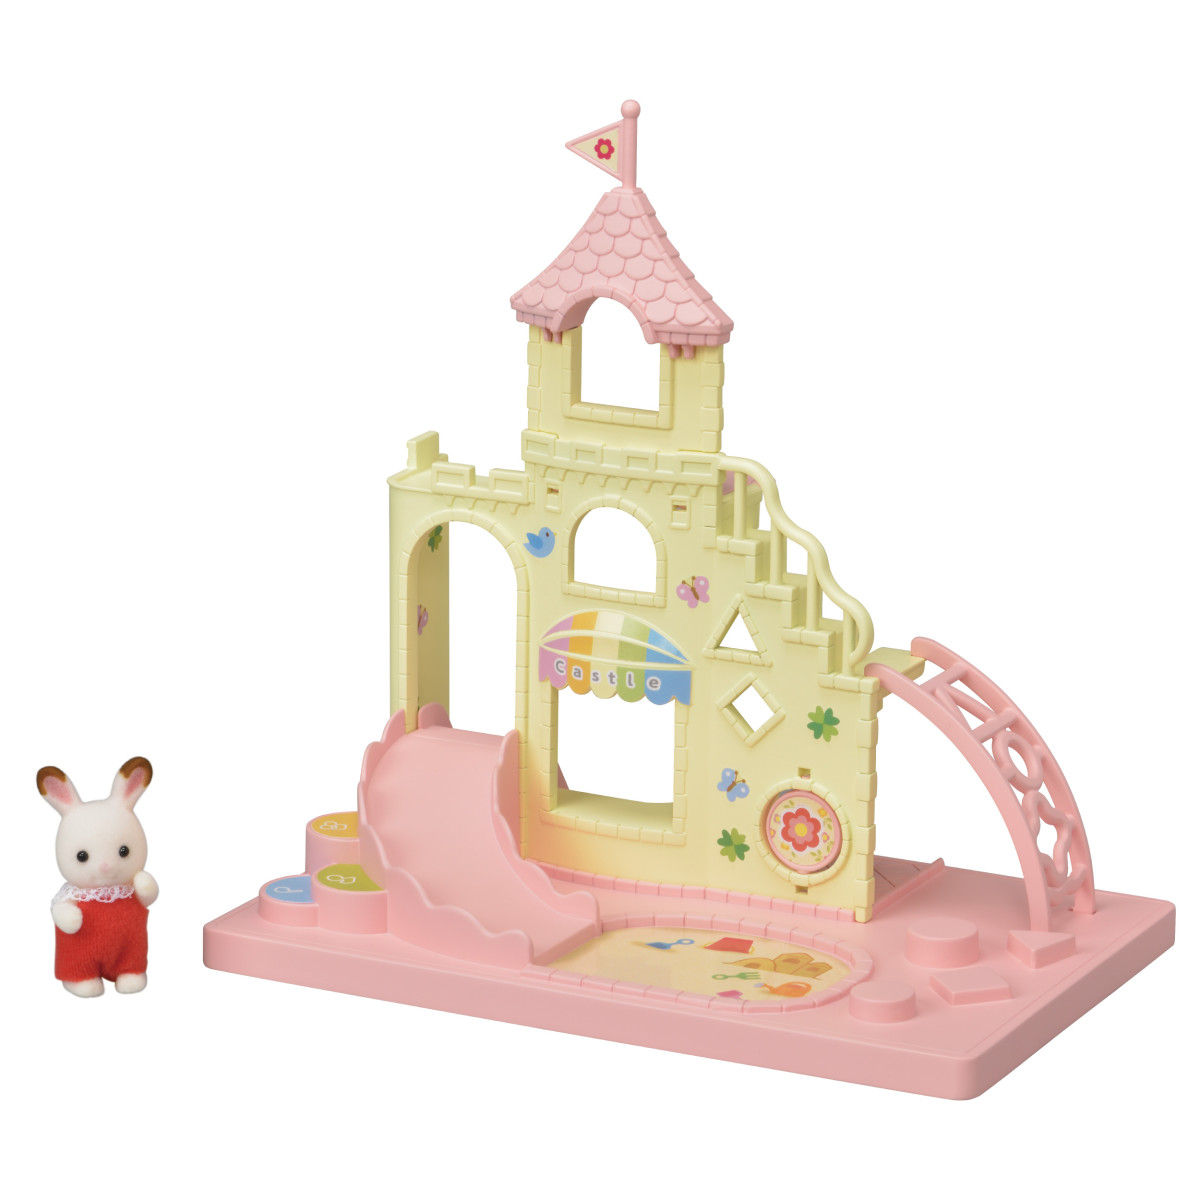 Baby Castle Playground, , large image 0